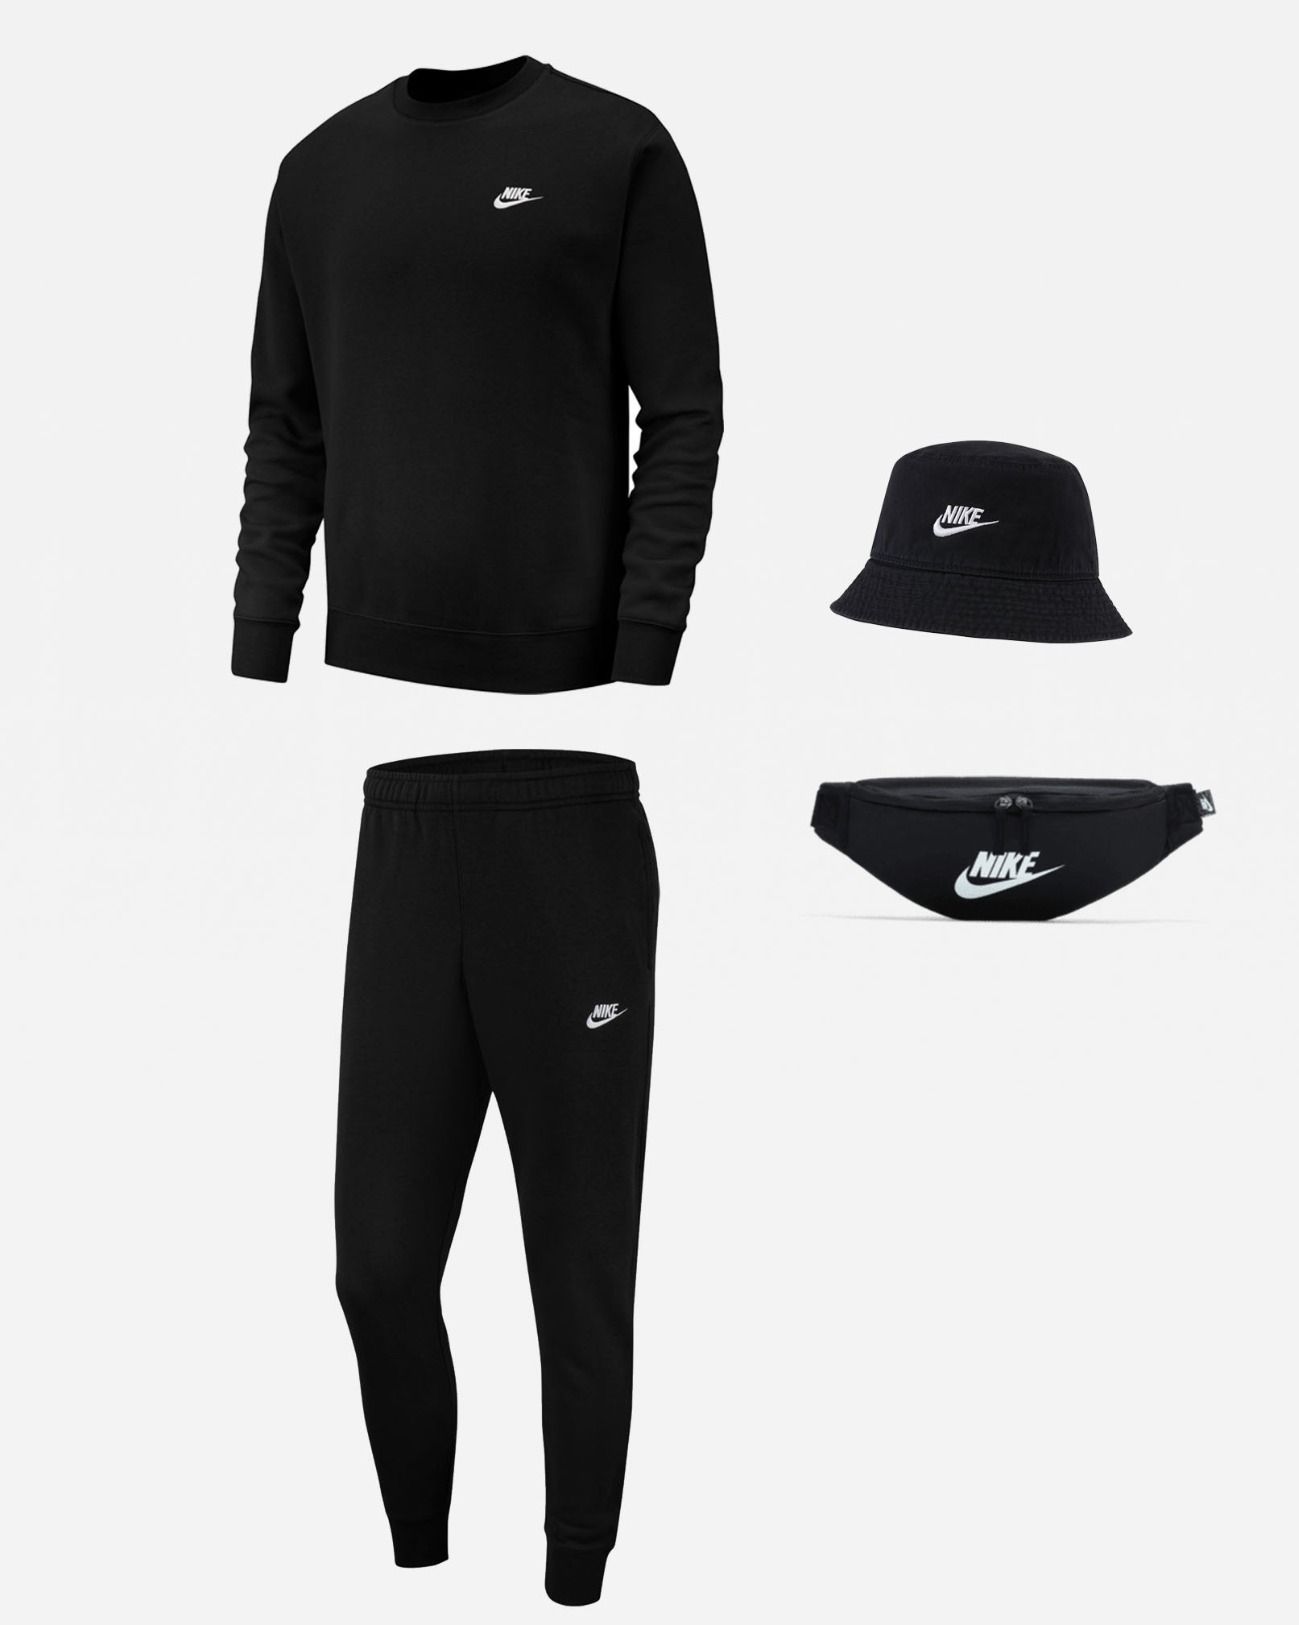 Pack Nike Sportswear pour Homme. Sweat-shirt + Bas de jogging + Bonnet +  Banane